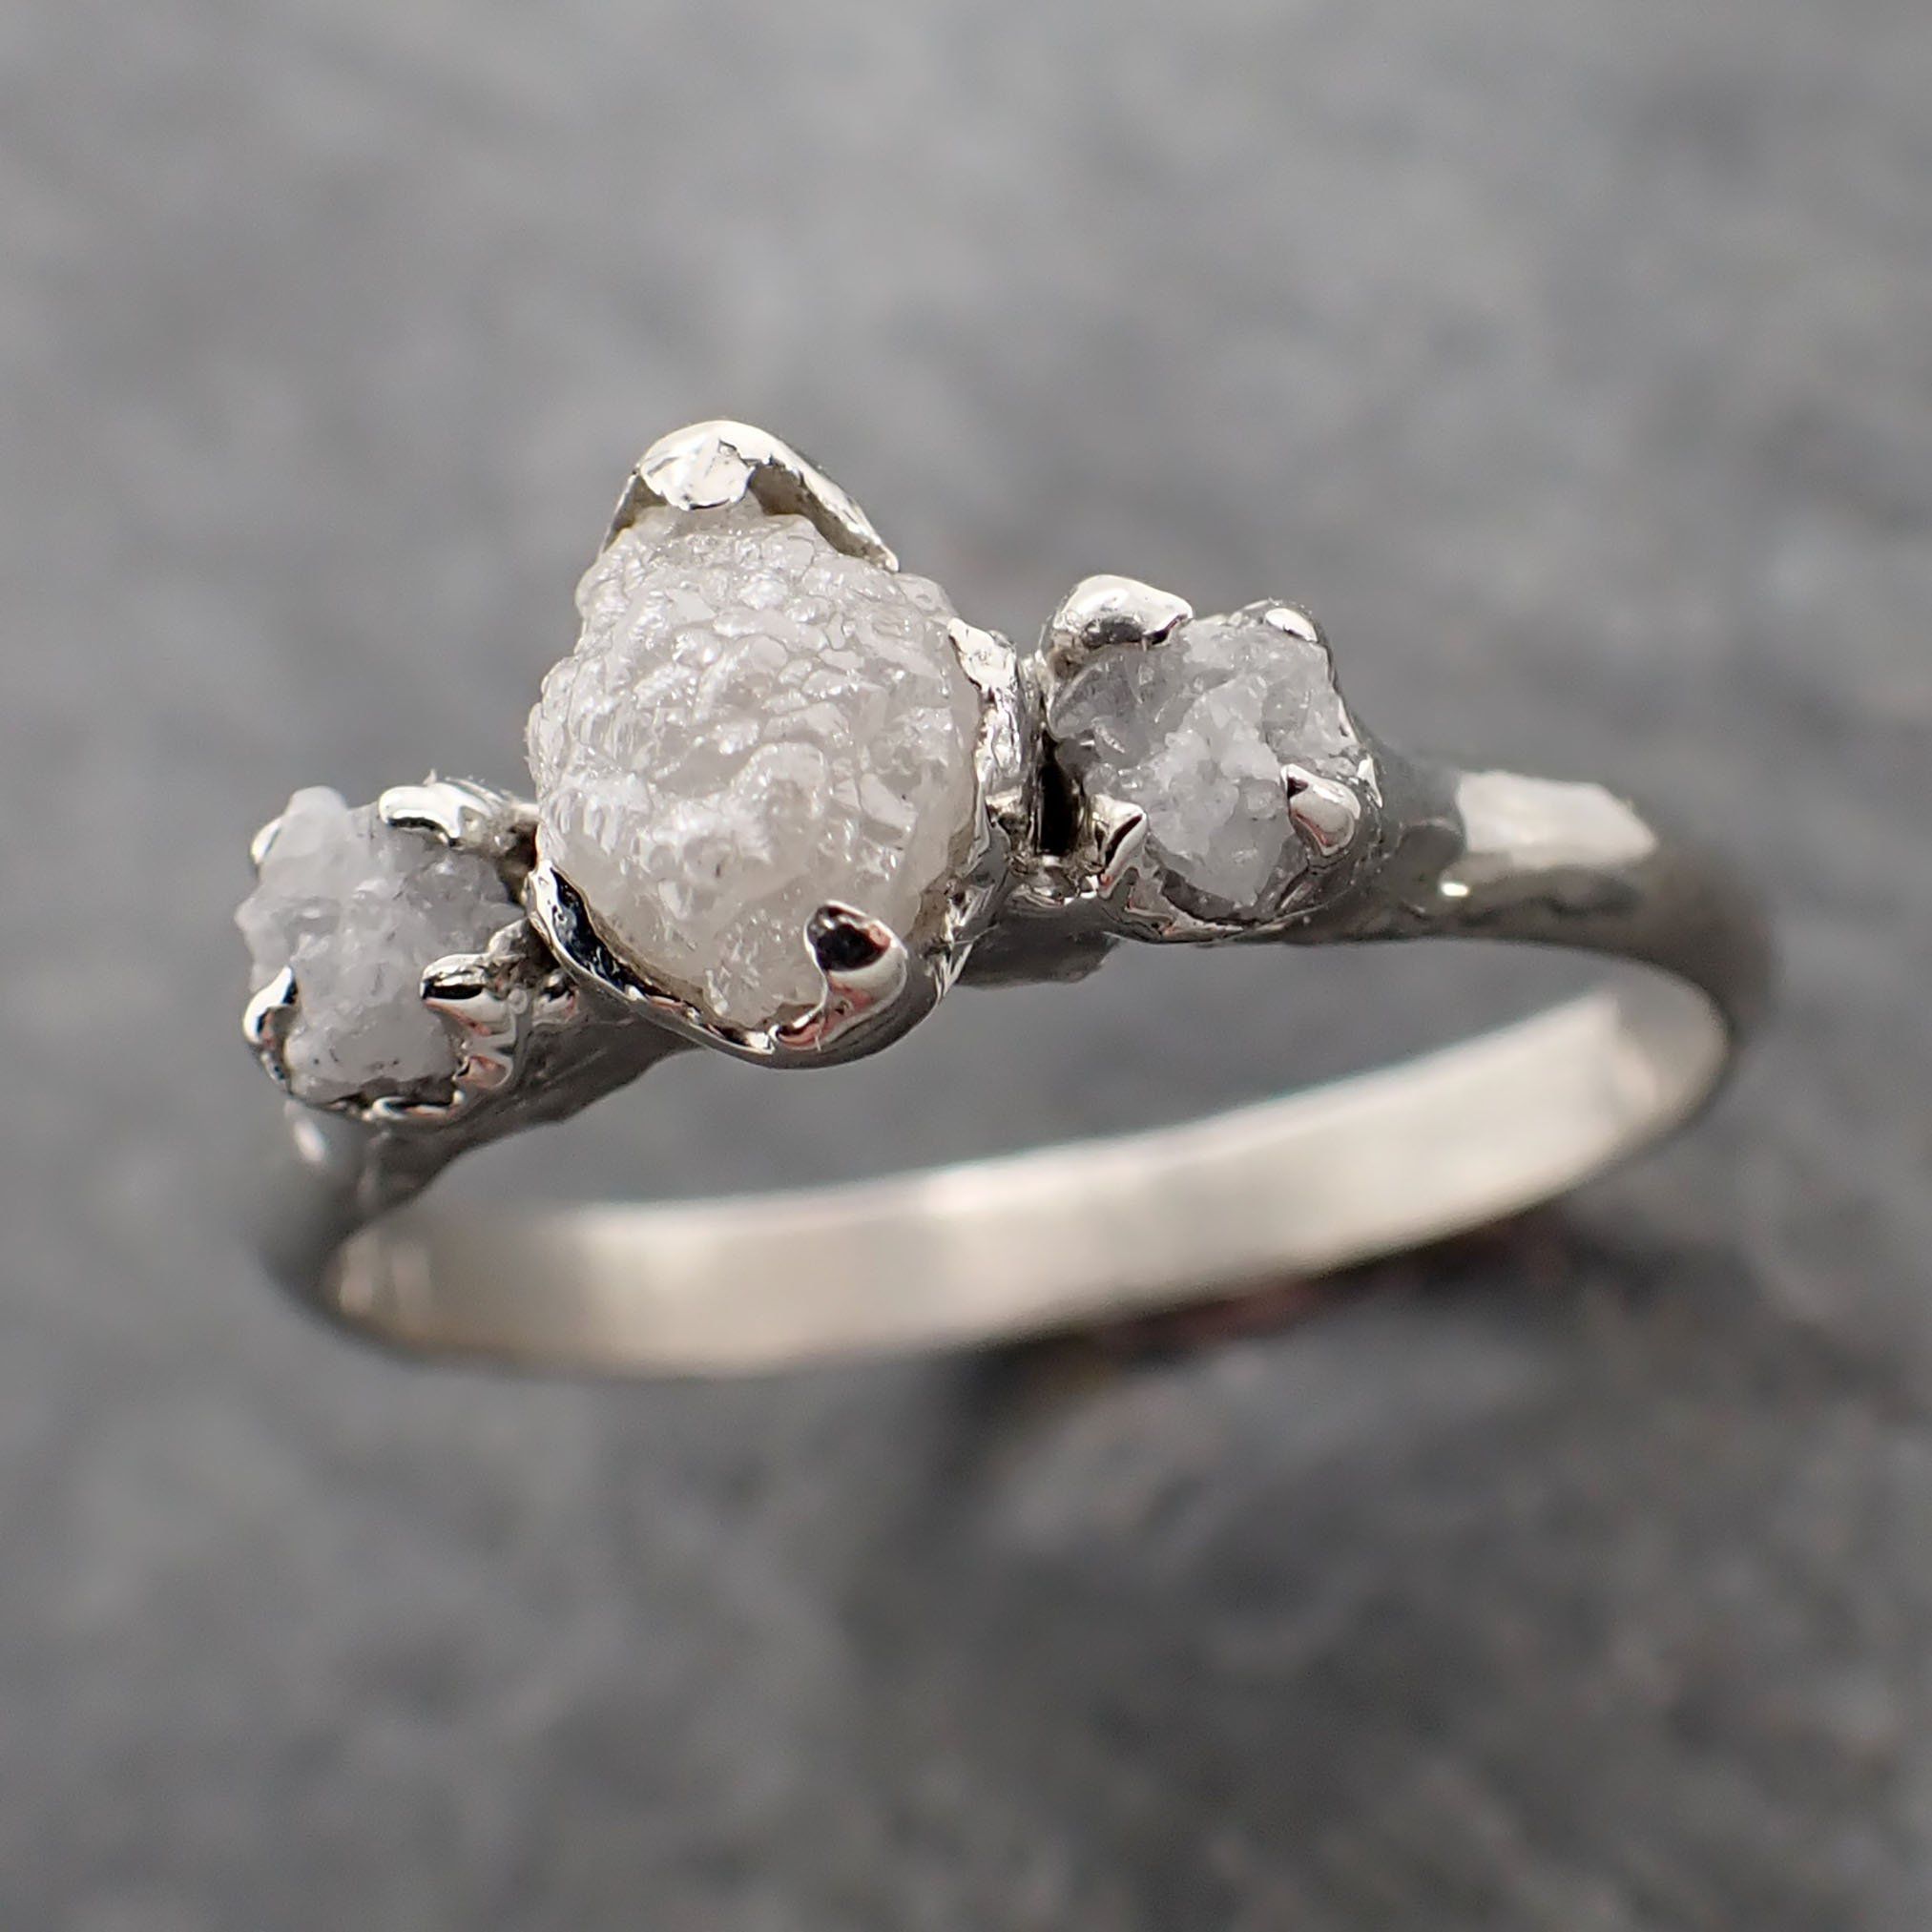 raw rough diamond engagement stacking ring multi stone wedding anniversary white gold 14k rustic byangeline c2169 Alternative Engagement